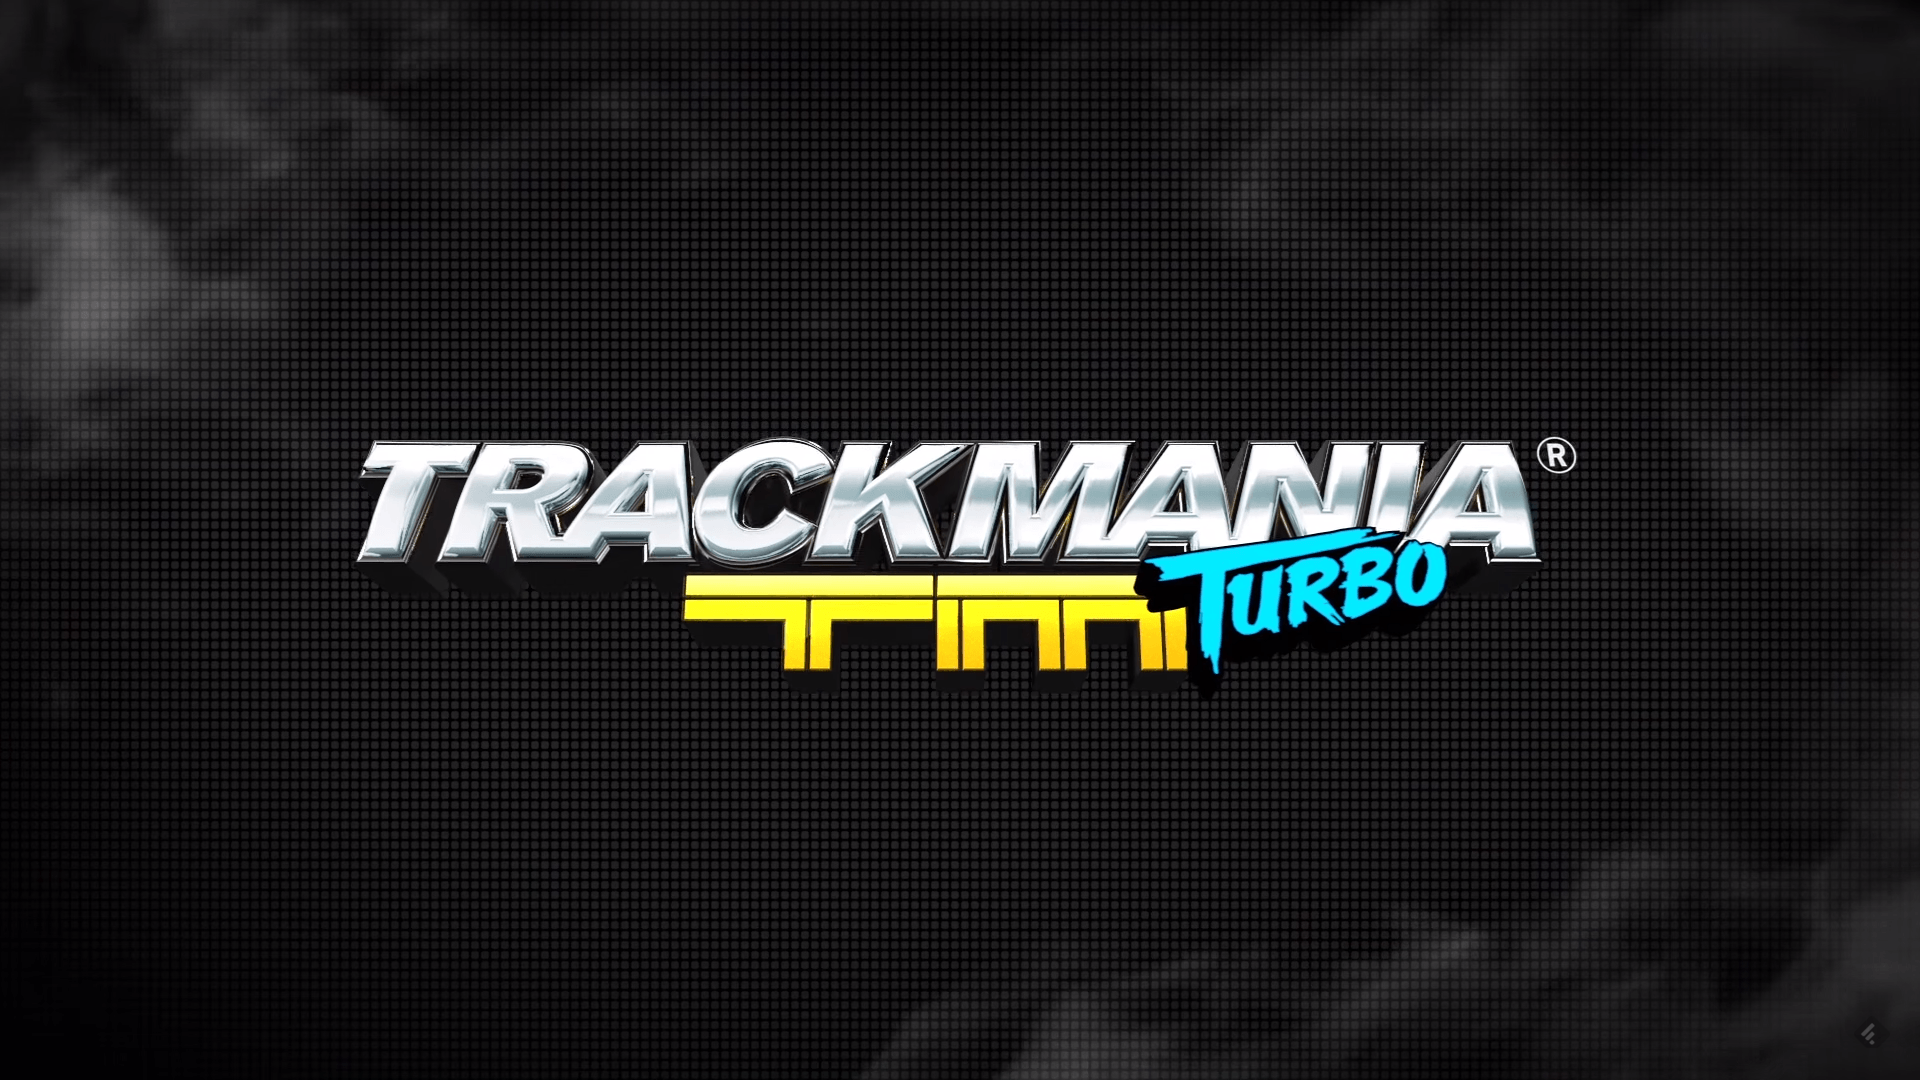 HD TrackMania Turbo Game Wallpaper.com Blog